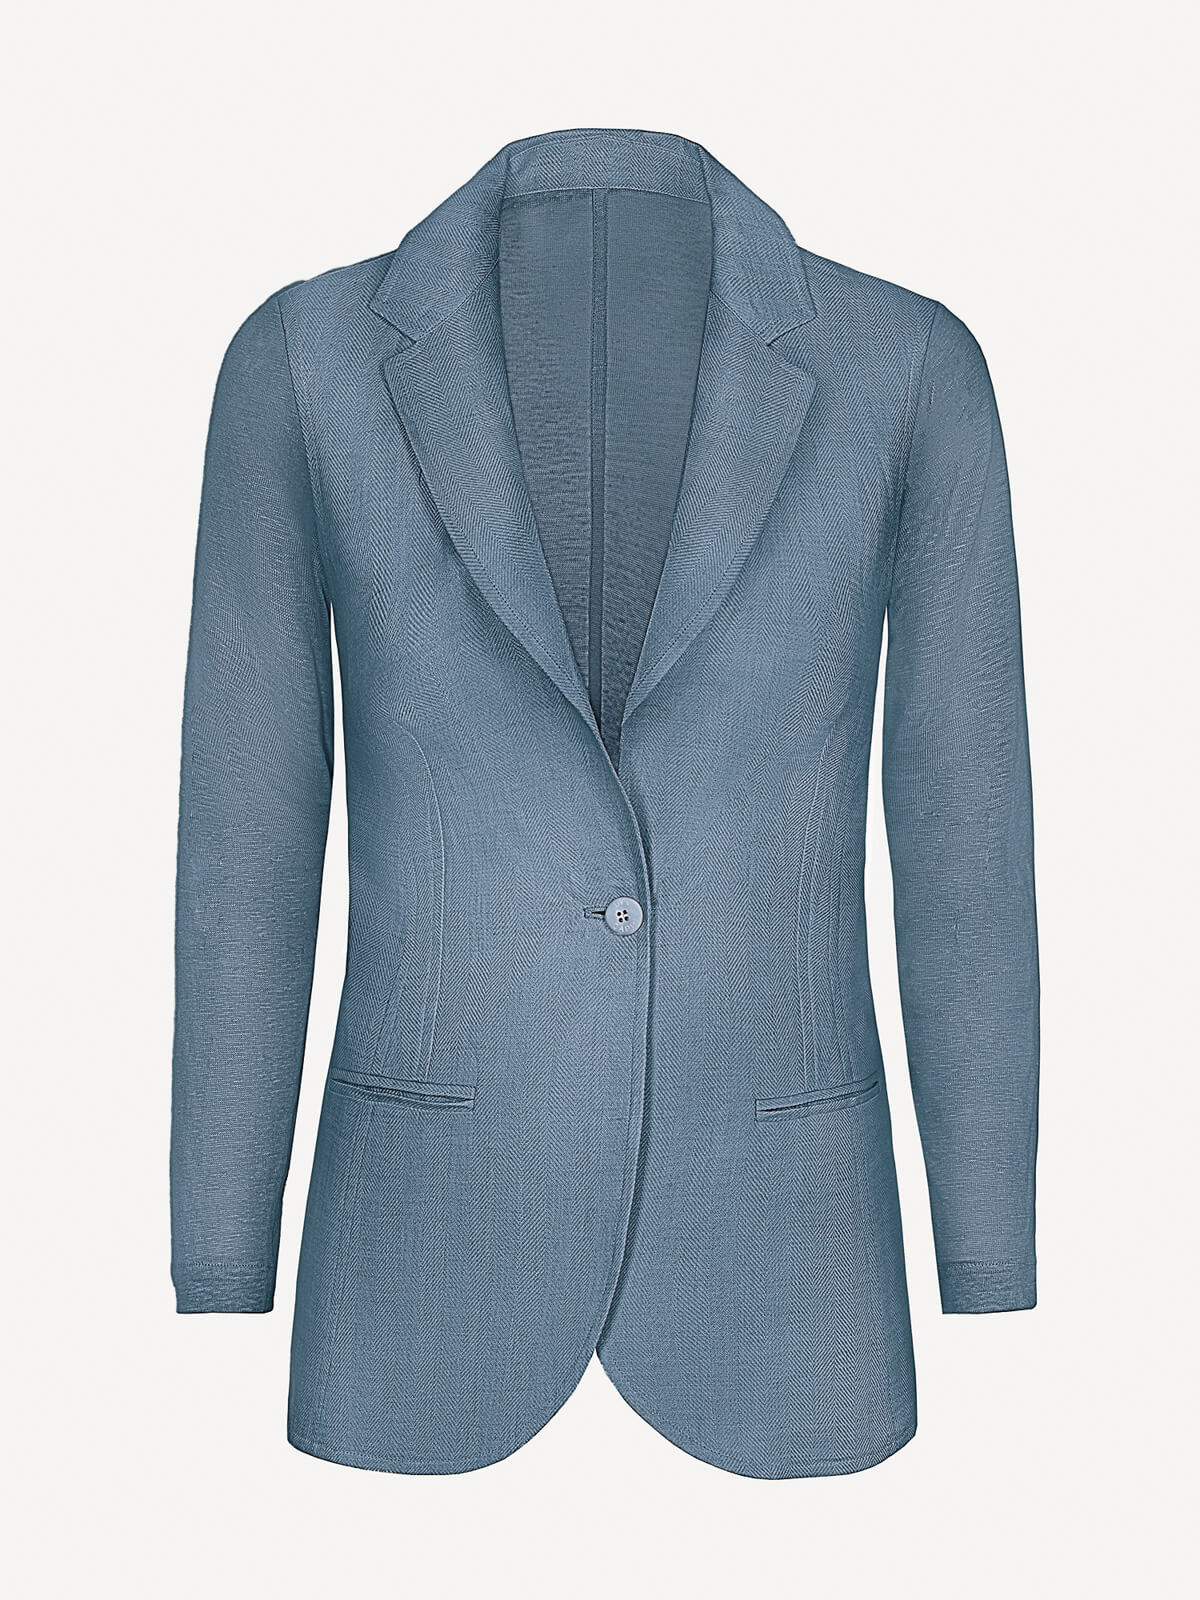 Giacca Sud Woman 100% Capri jeans linen jacket front